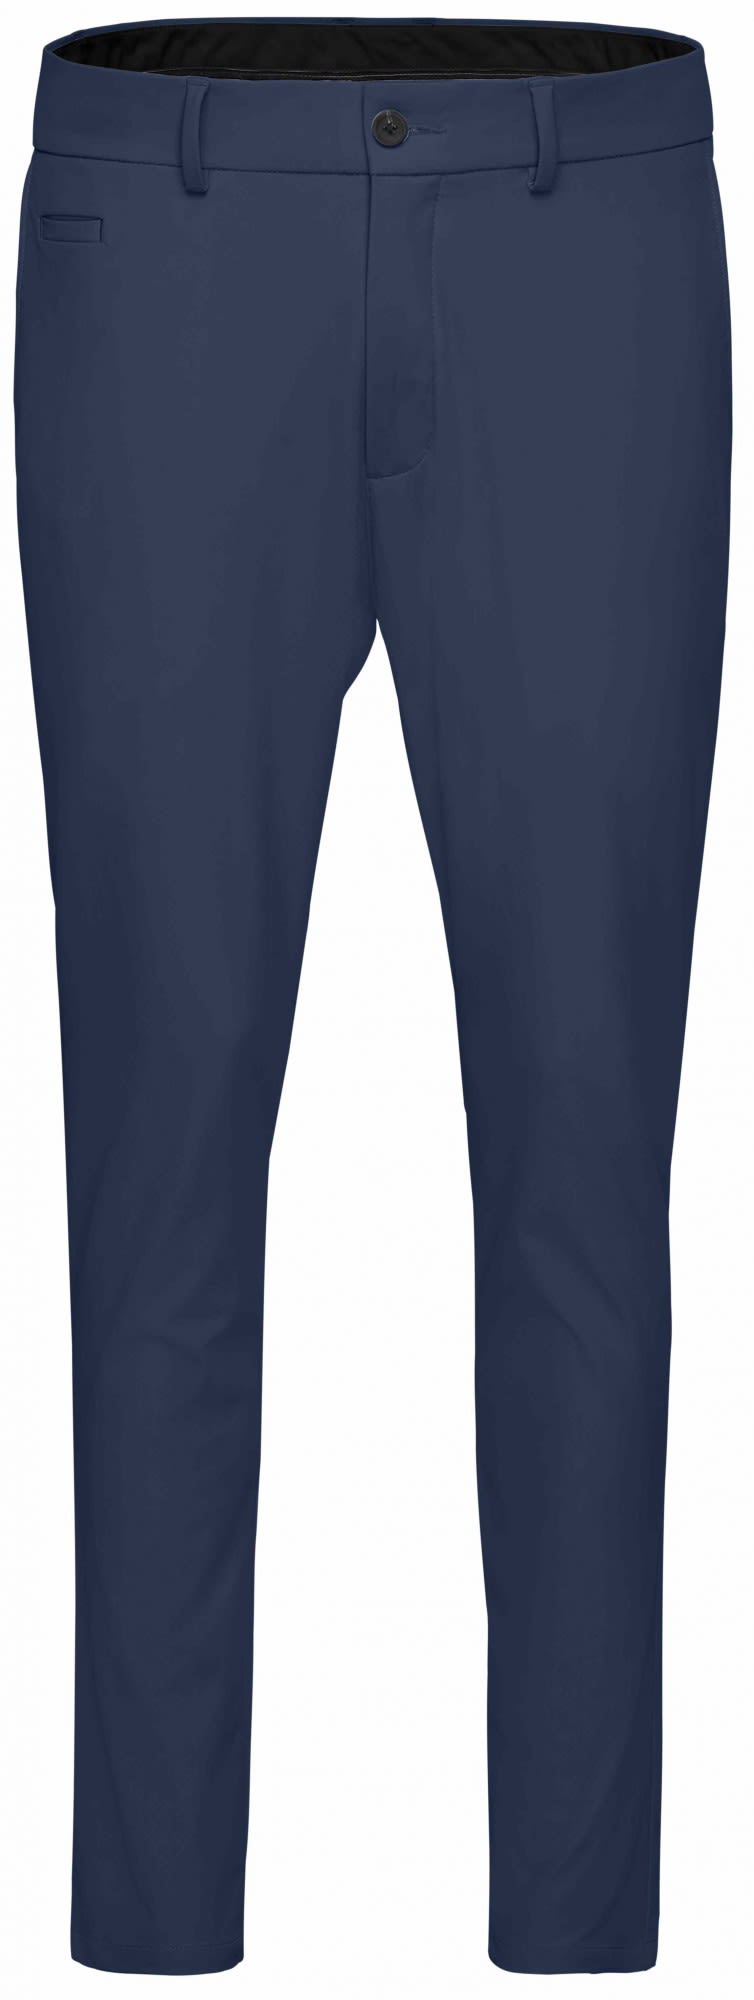 Kjus Men Ike Pants (tailored Fit) Blau | Größe 40 - Short | Herren Hose